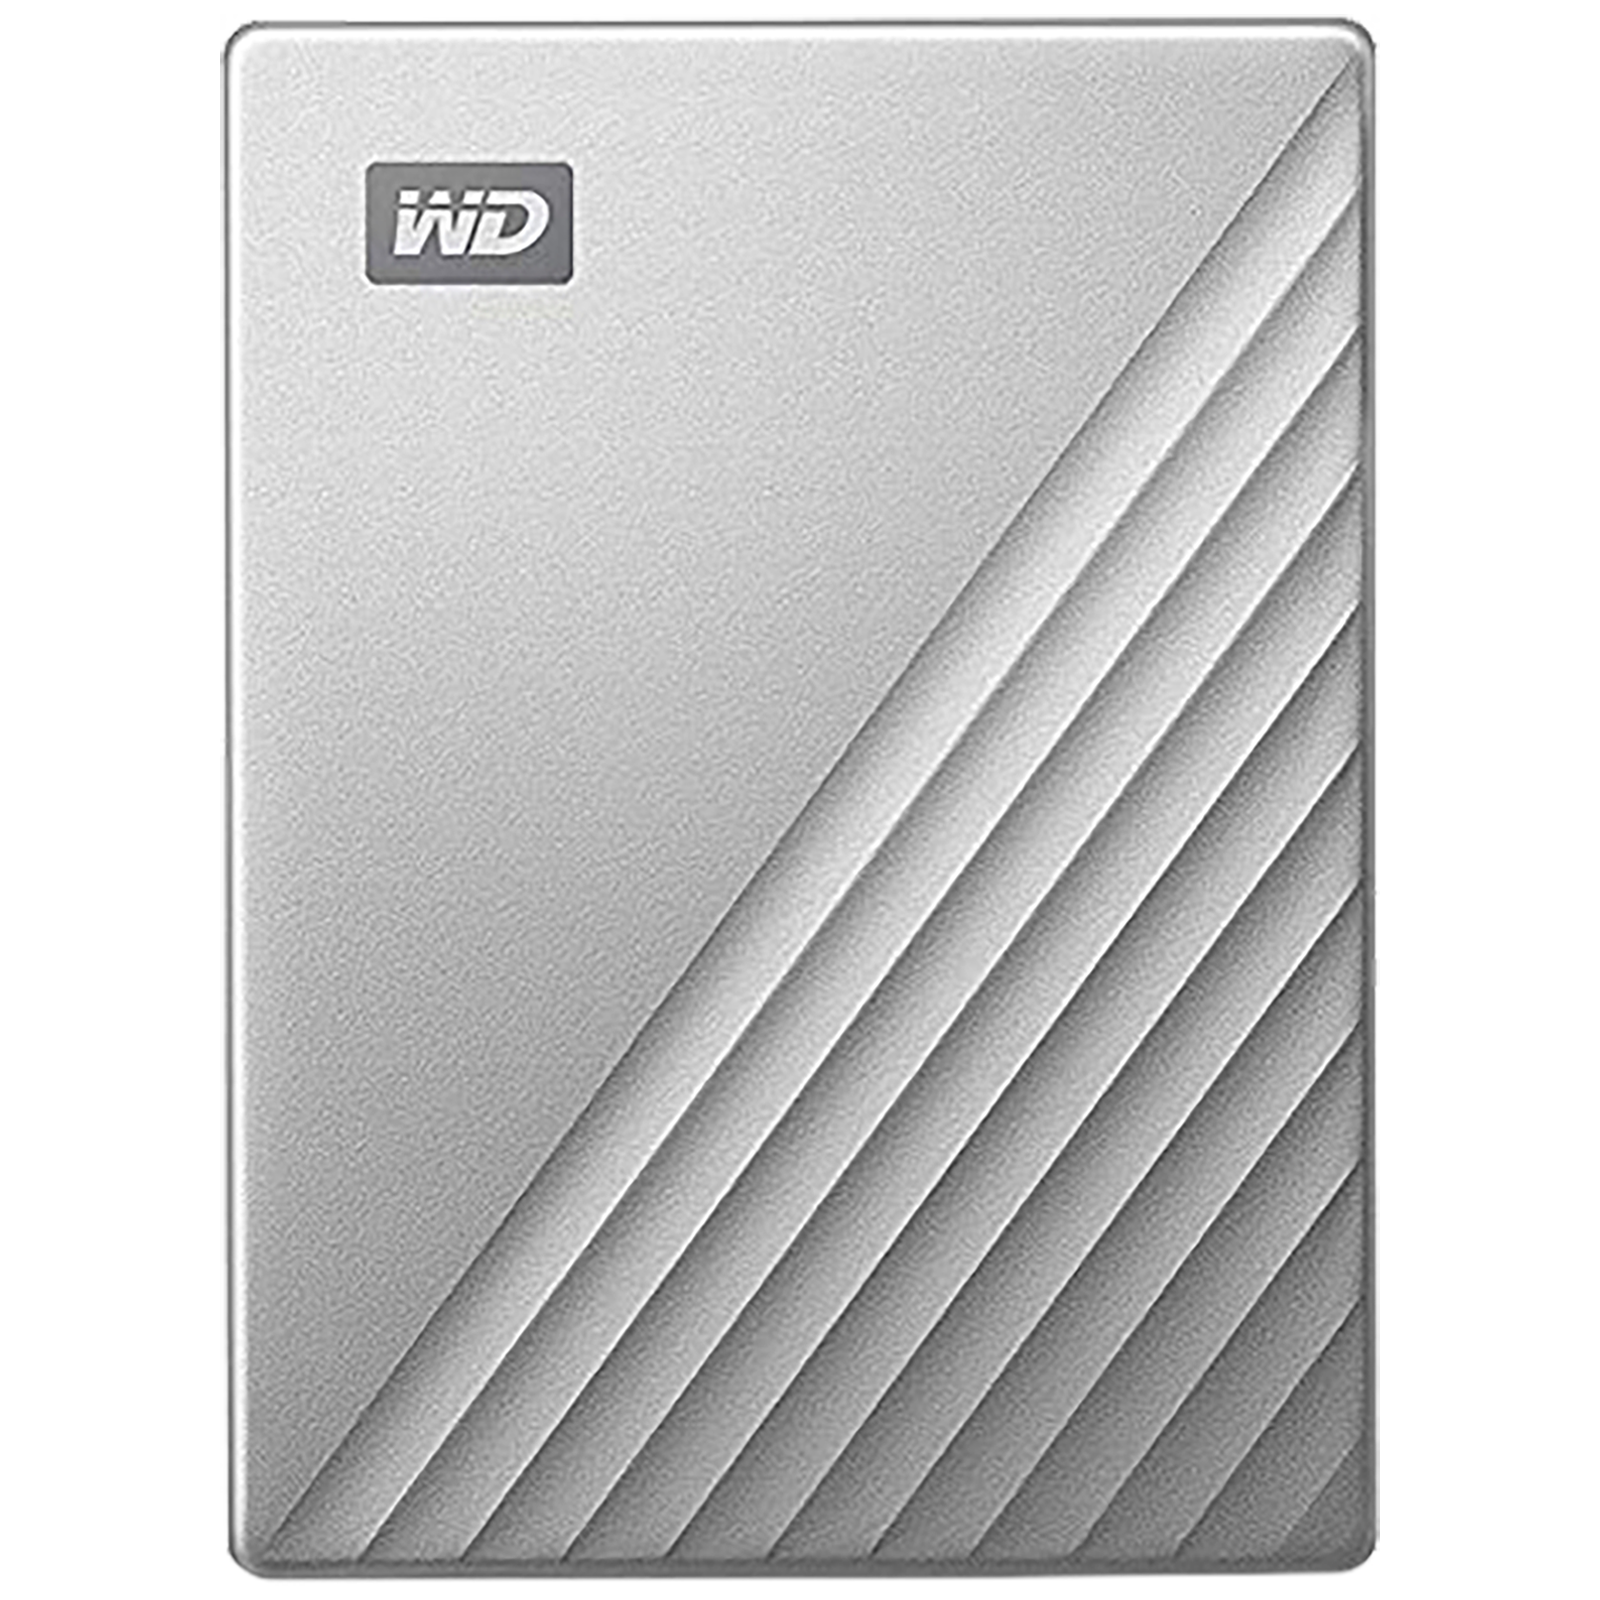 Western Digital My Passport Ultra 2 TB USB 2.0/3.0 Hard Disk Drive (Automatic Backup, WDBC3C0020BSL-WESN, Silver)